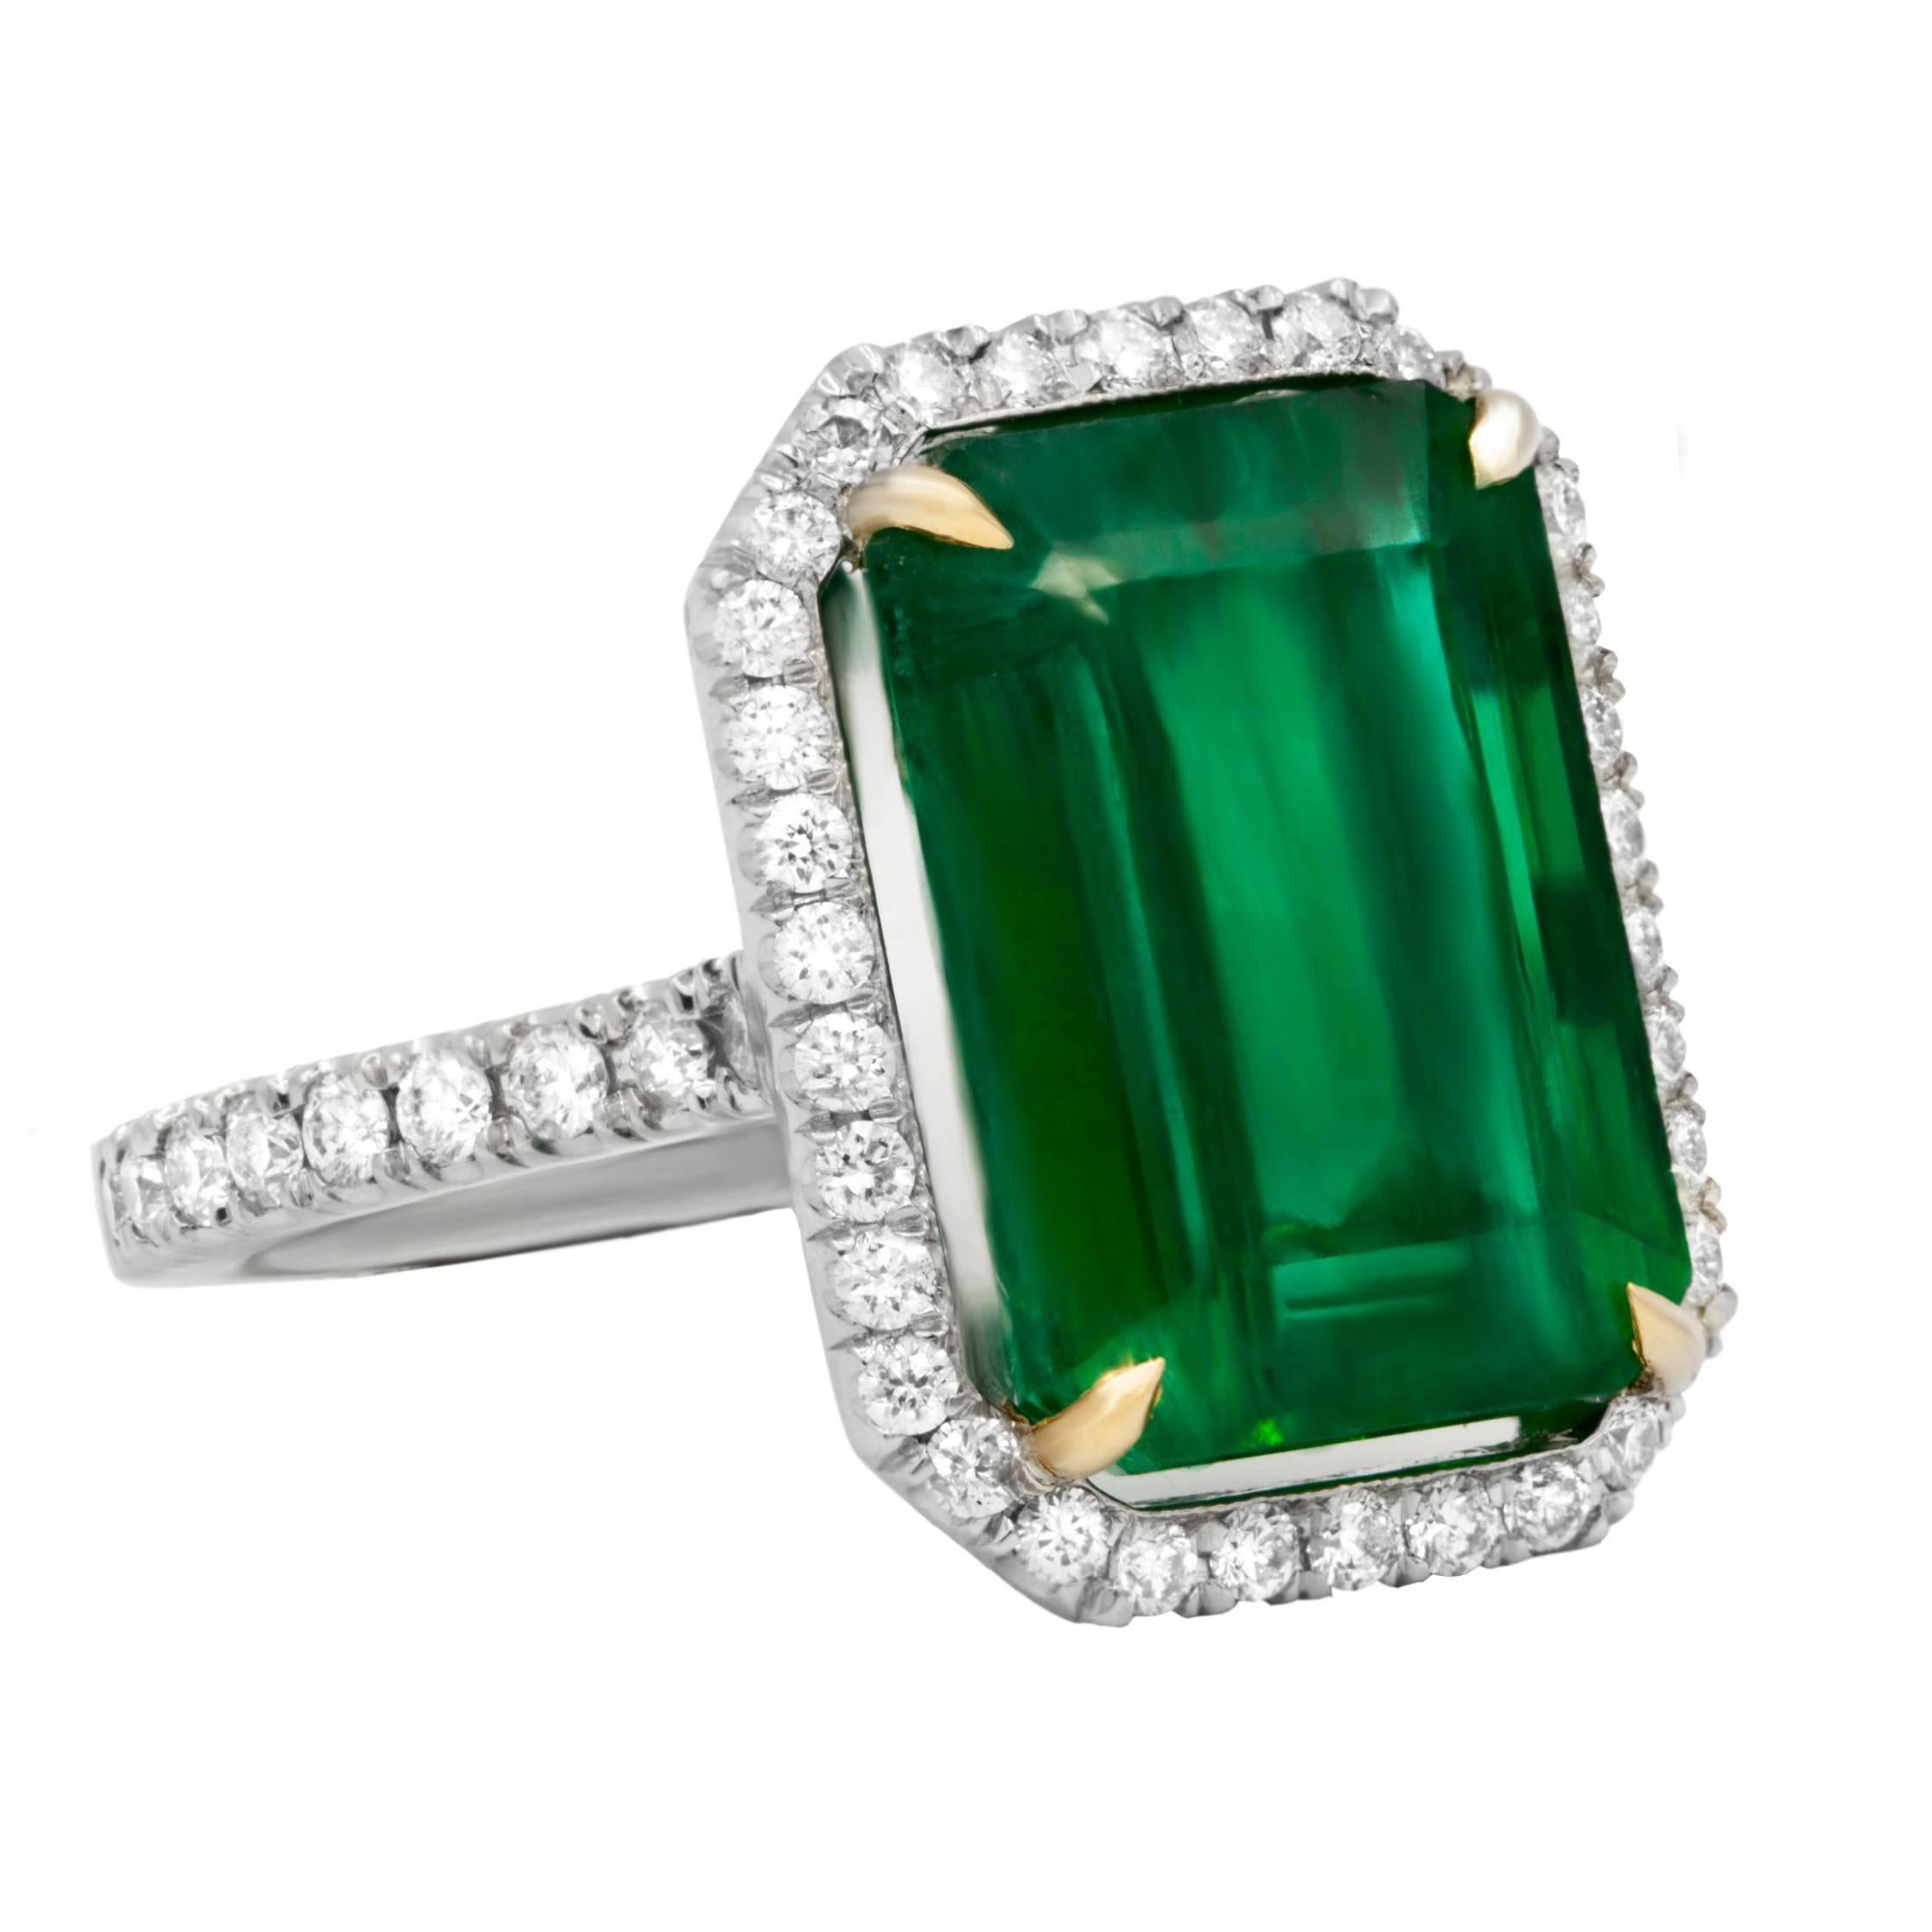 10.10 Carat Emerald Cut Green Emerald Ring